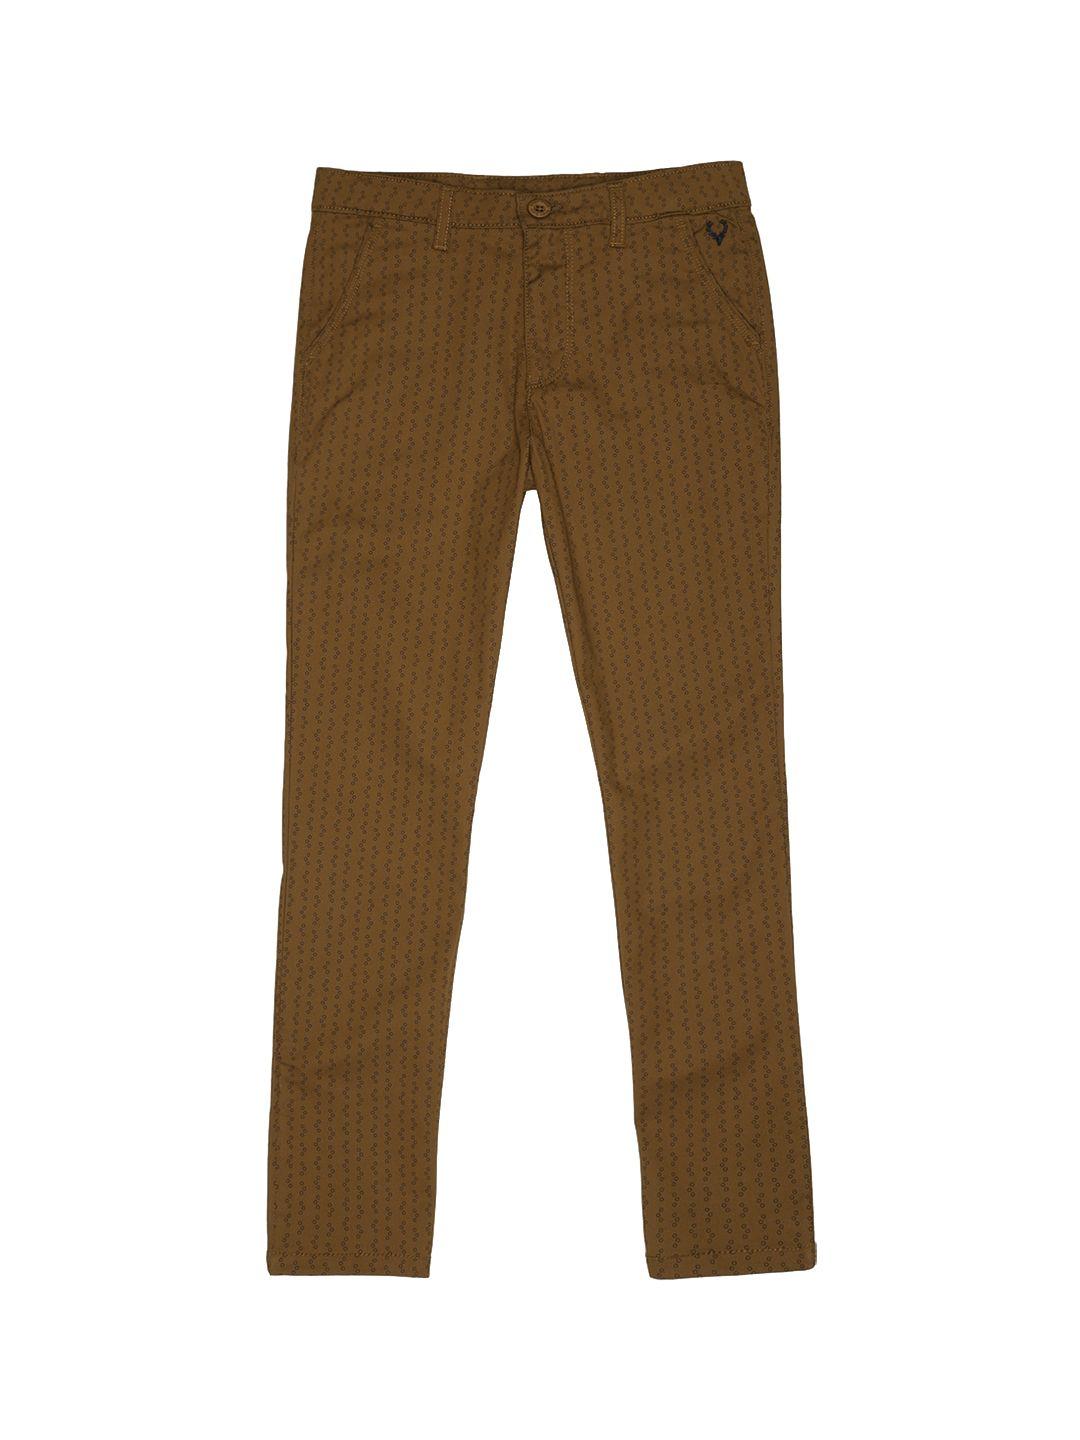 allen solly junior boys brown printed regular trousers